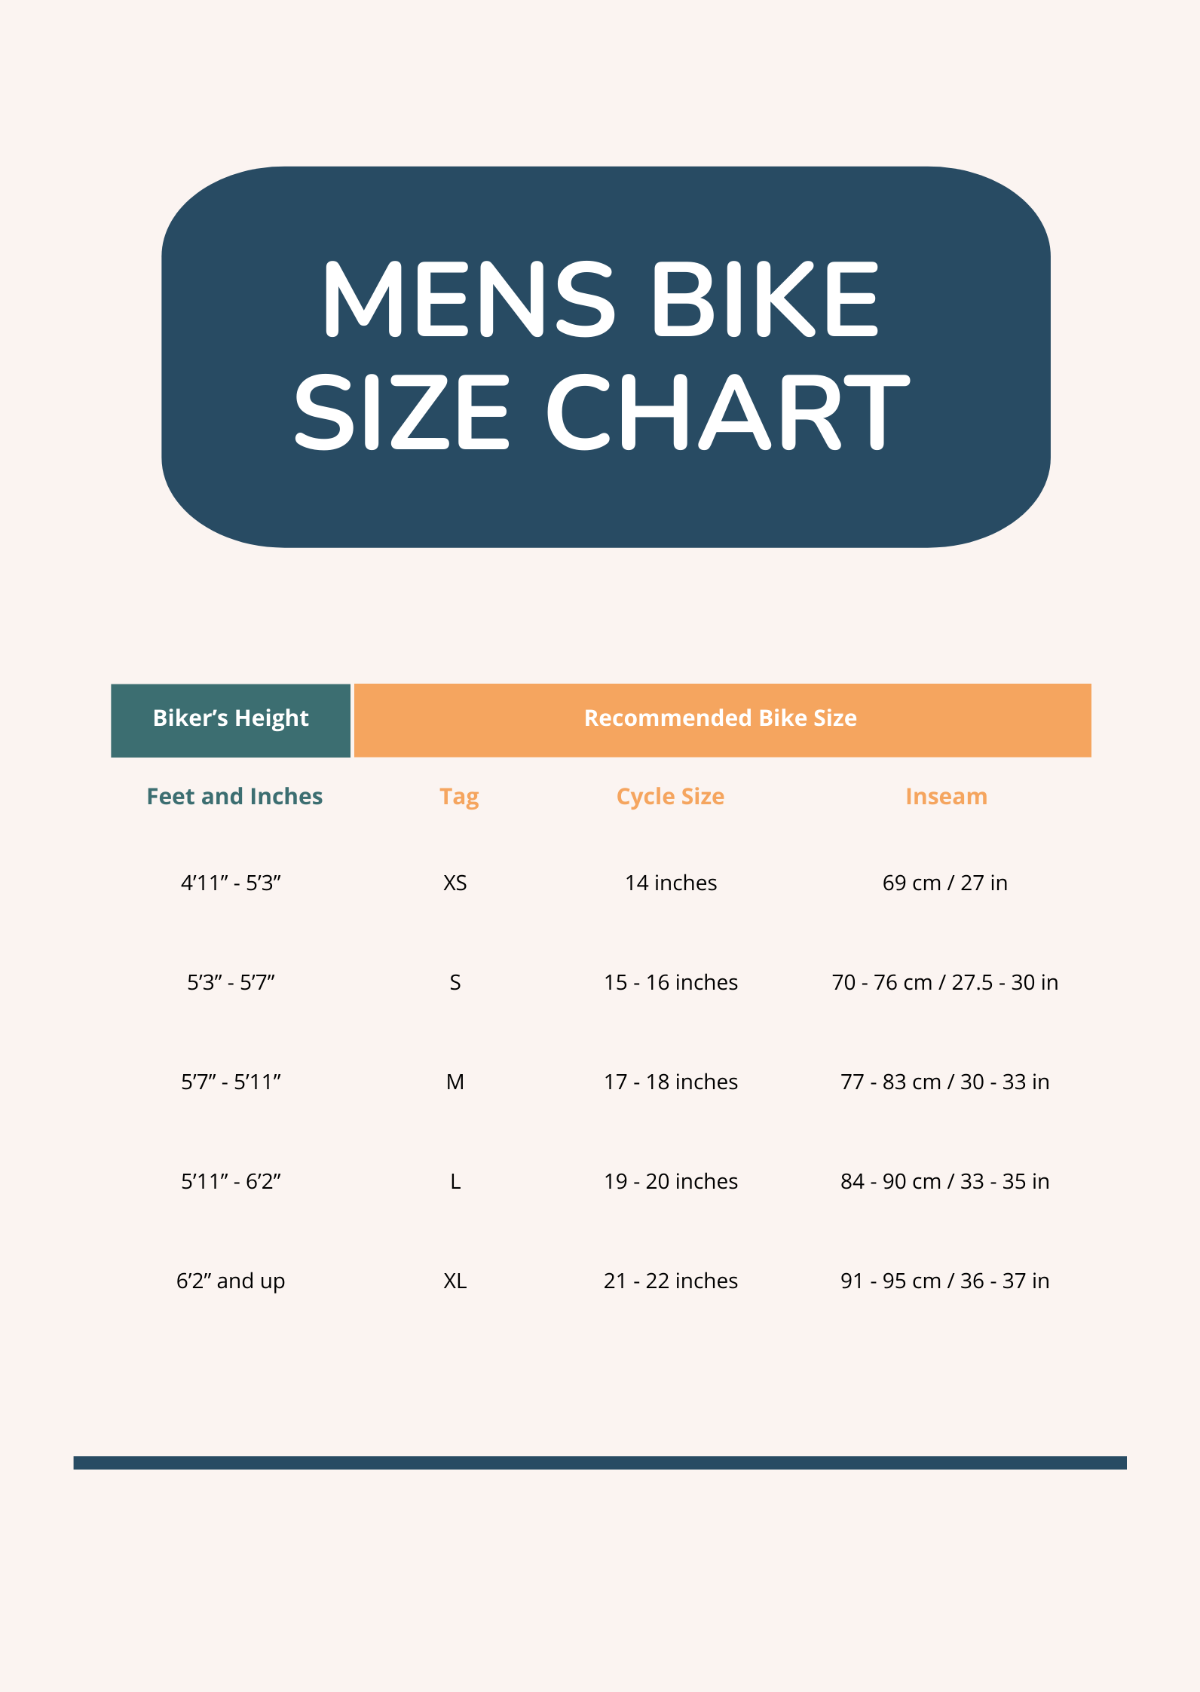 Mens Bike Size Chart Template